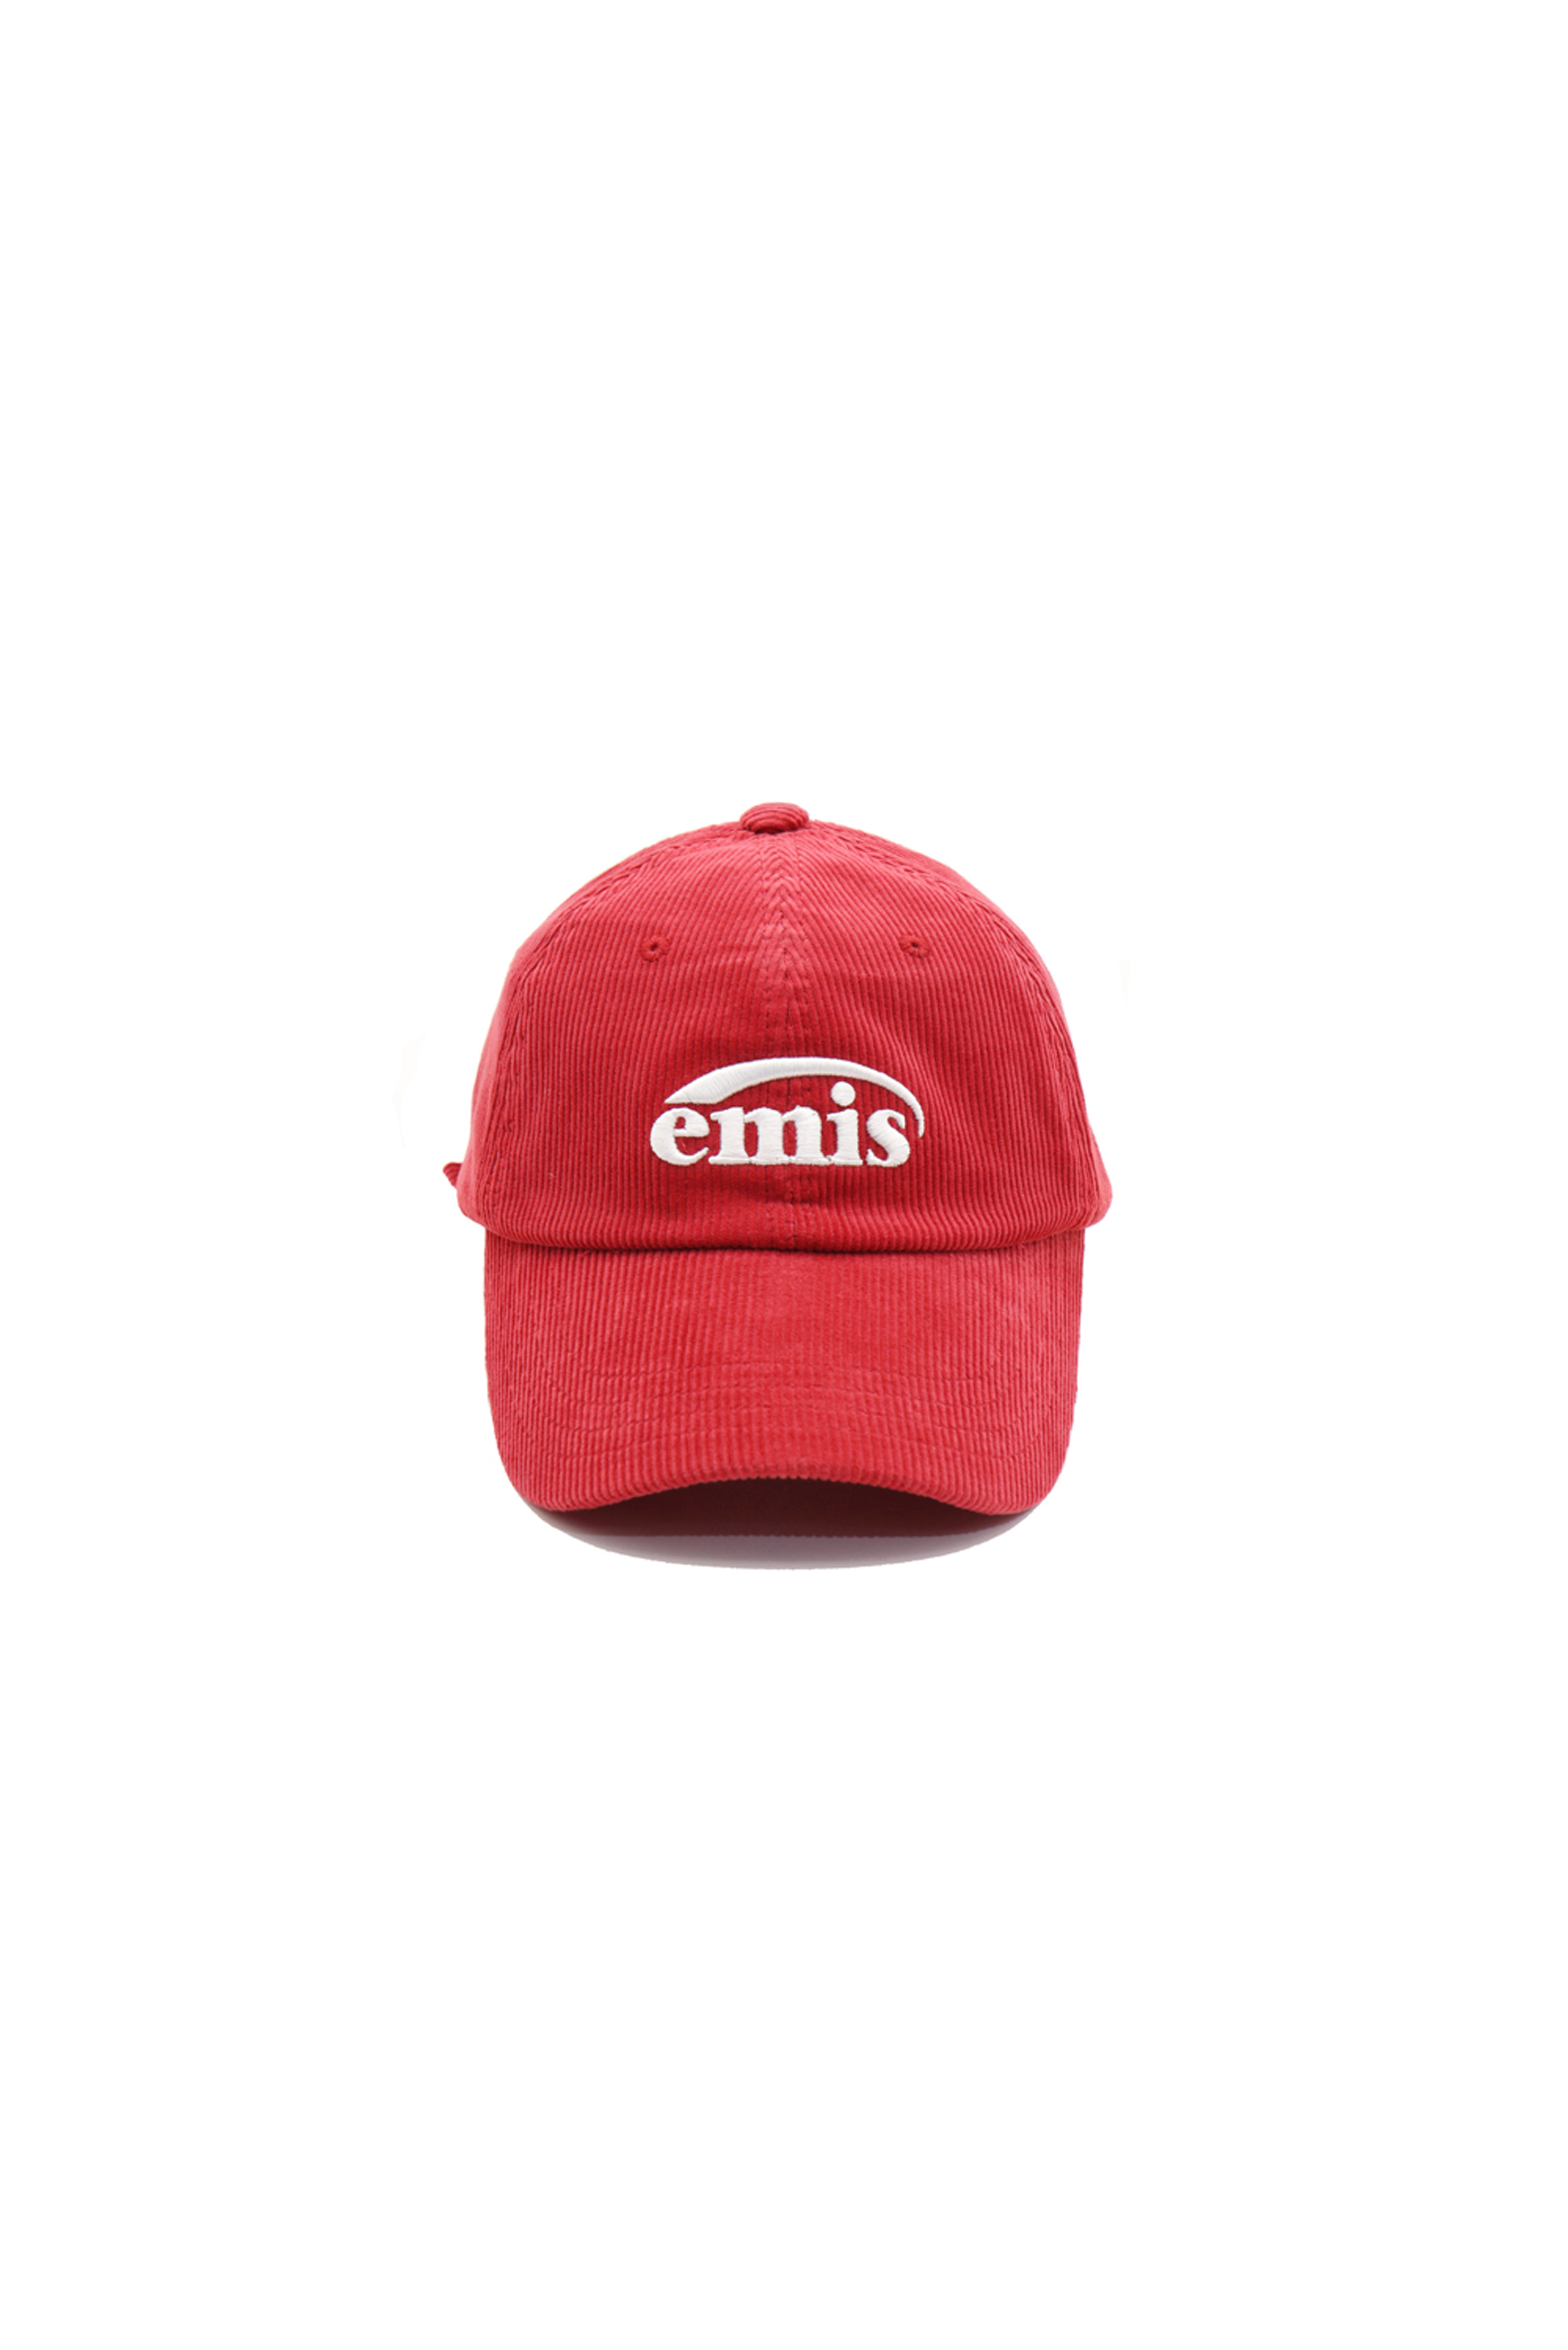 NEW LOGO CORDUROY EMIS CAP-RED